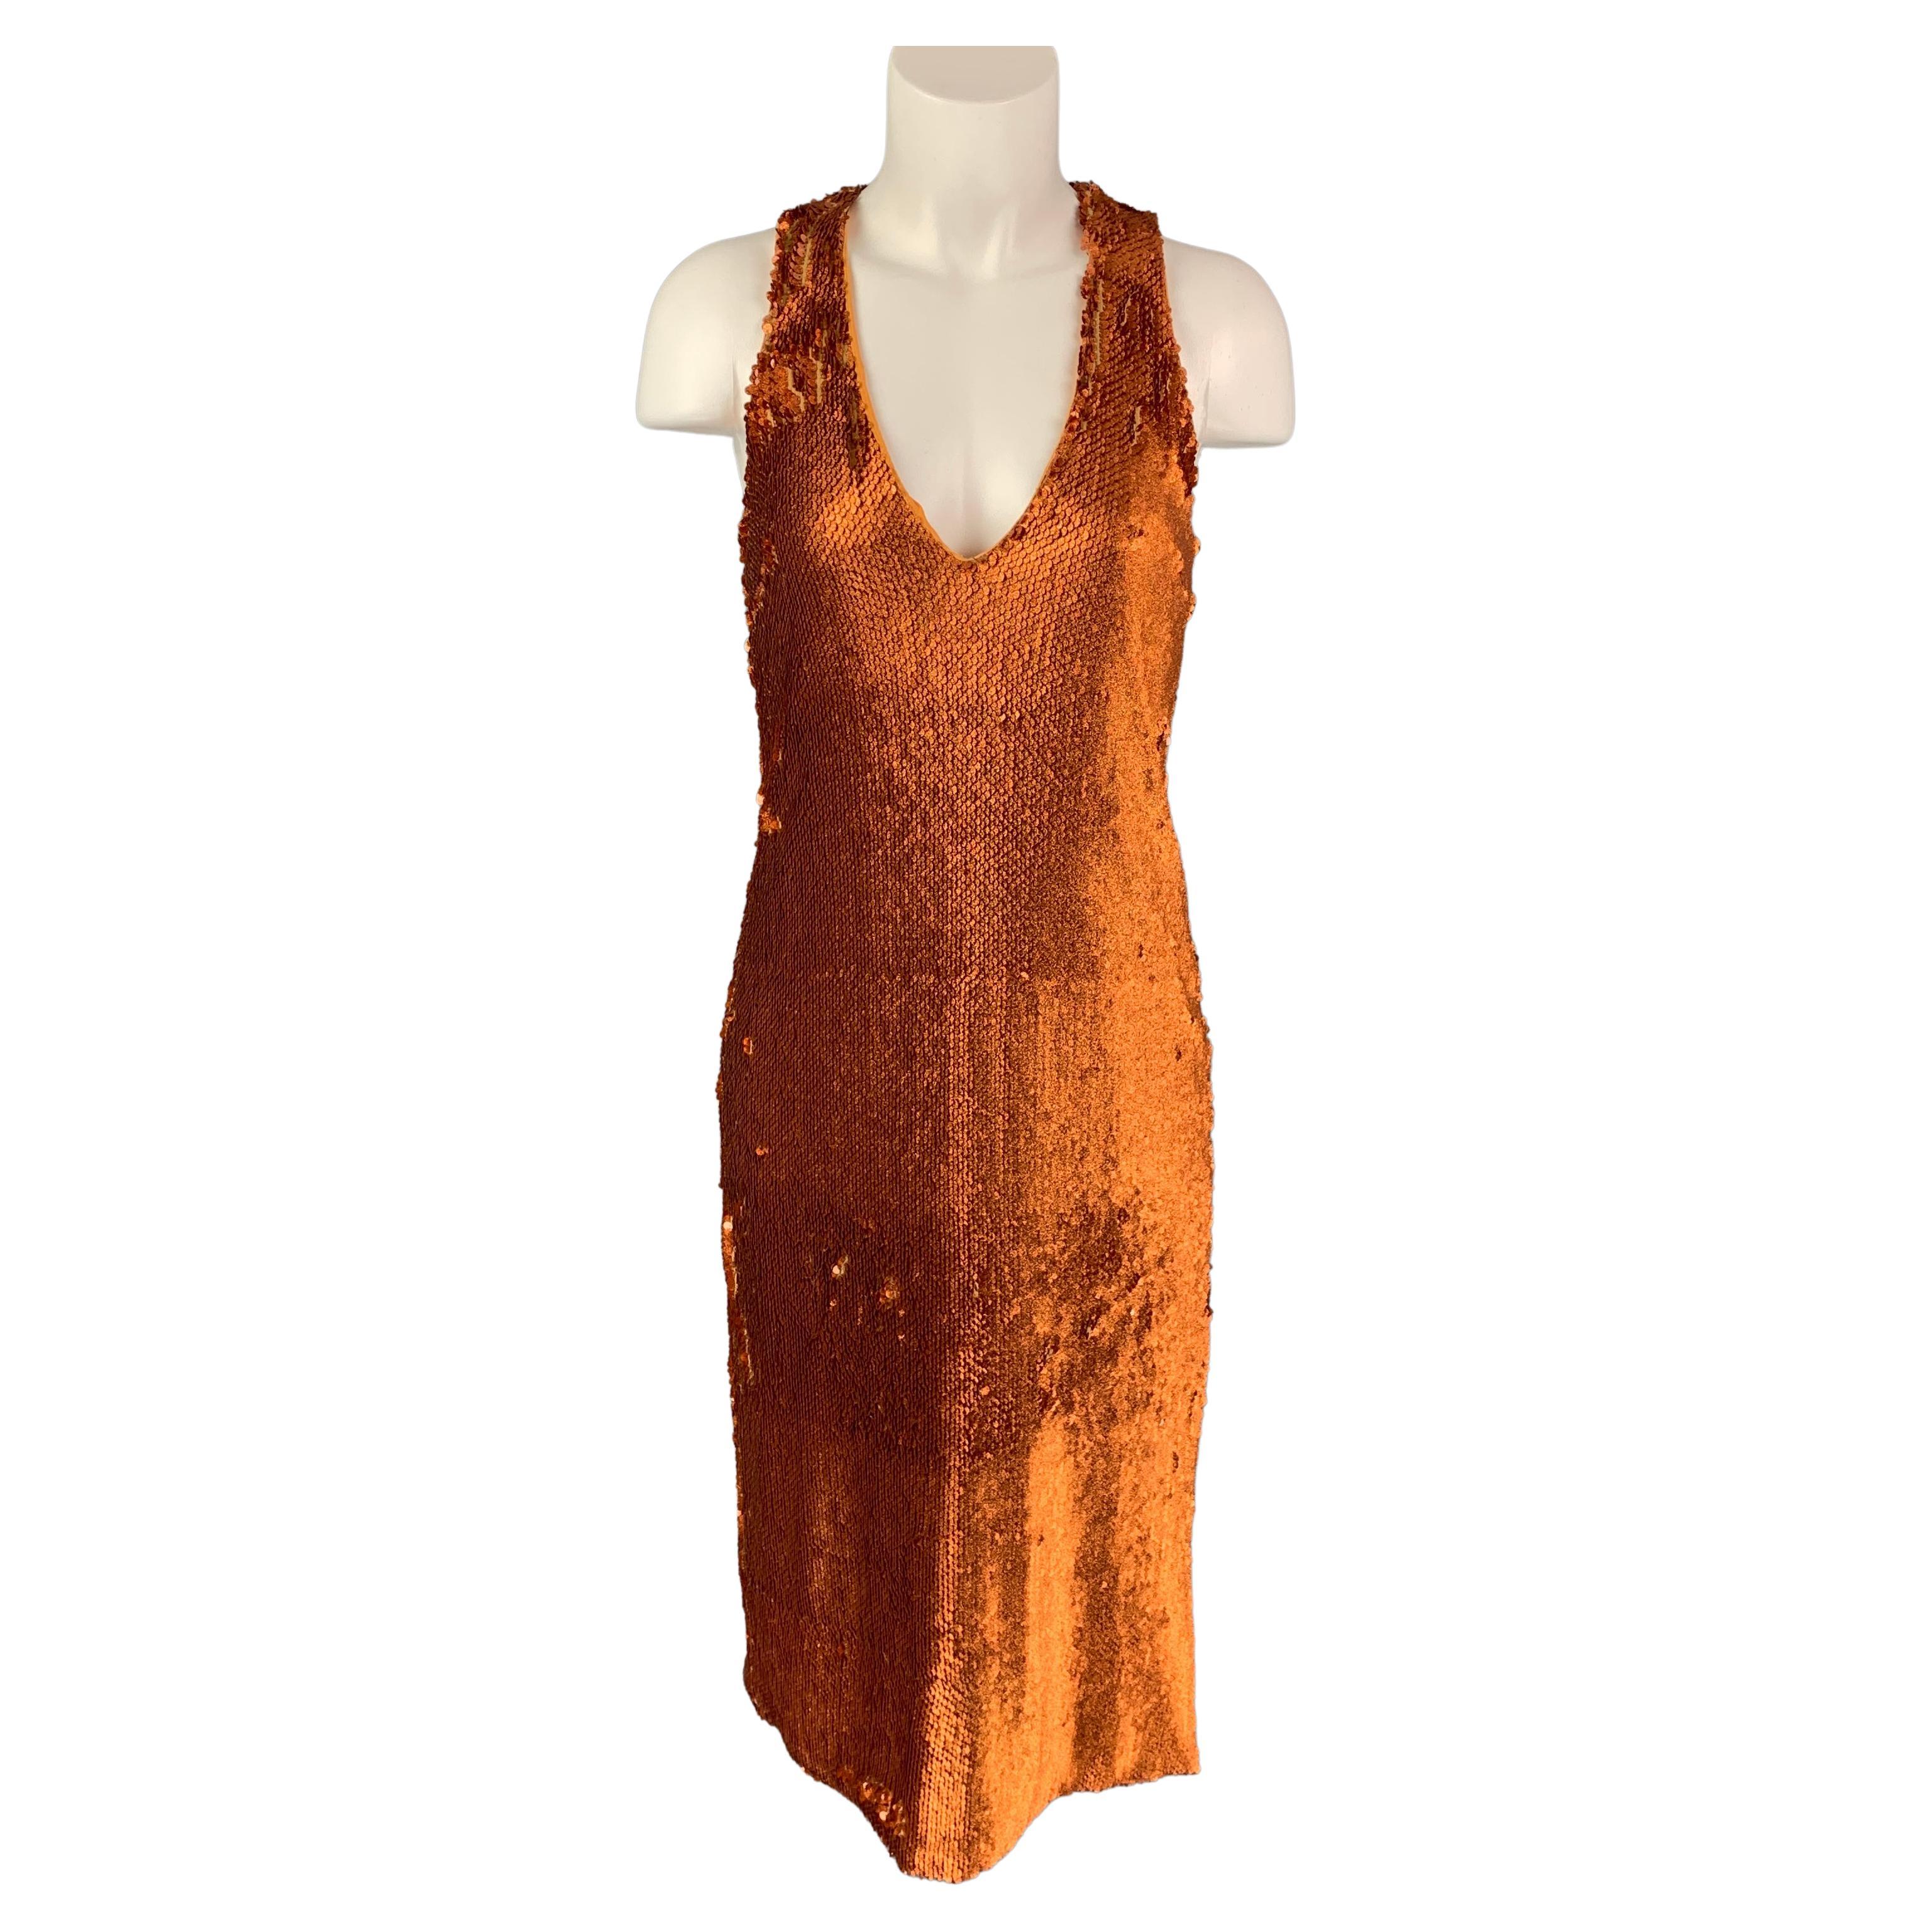 PRABAL GURUNG Size 0 Copper Polyester Sequined Dress